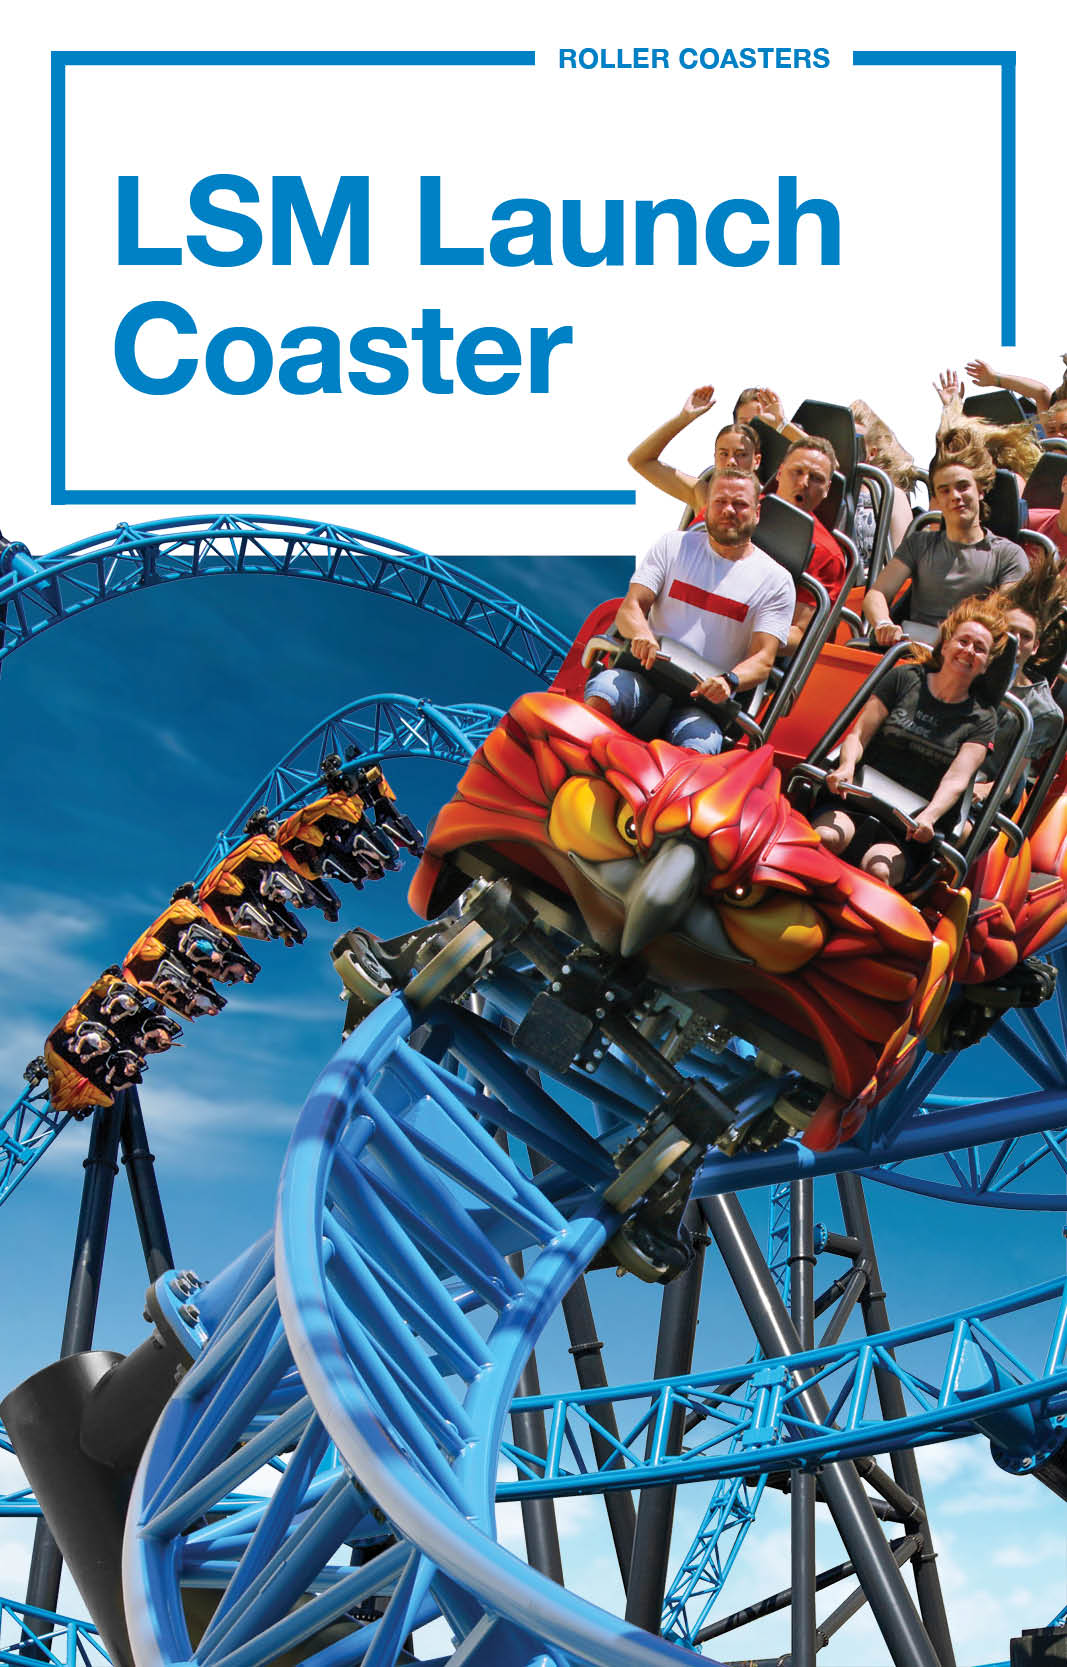 LSM Launch Roller Coaster, Multi-Launch Coaster